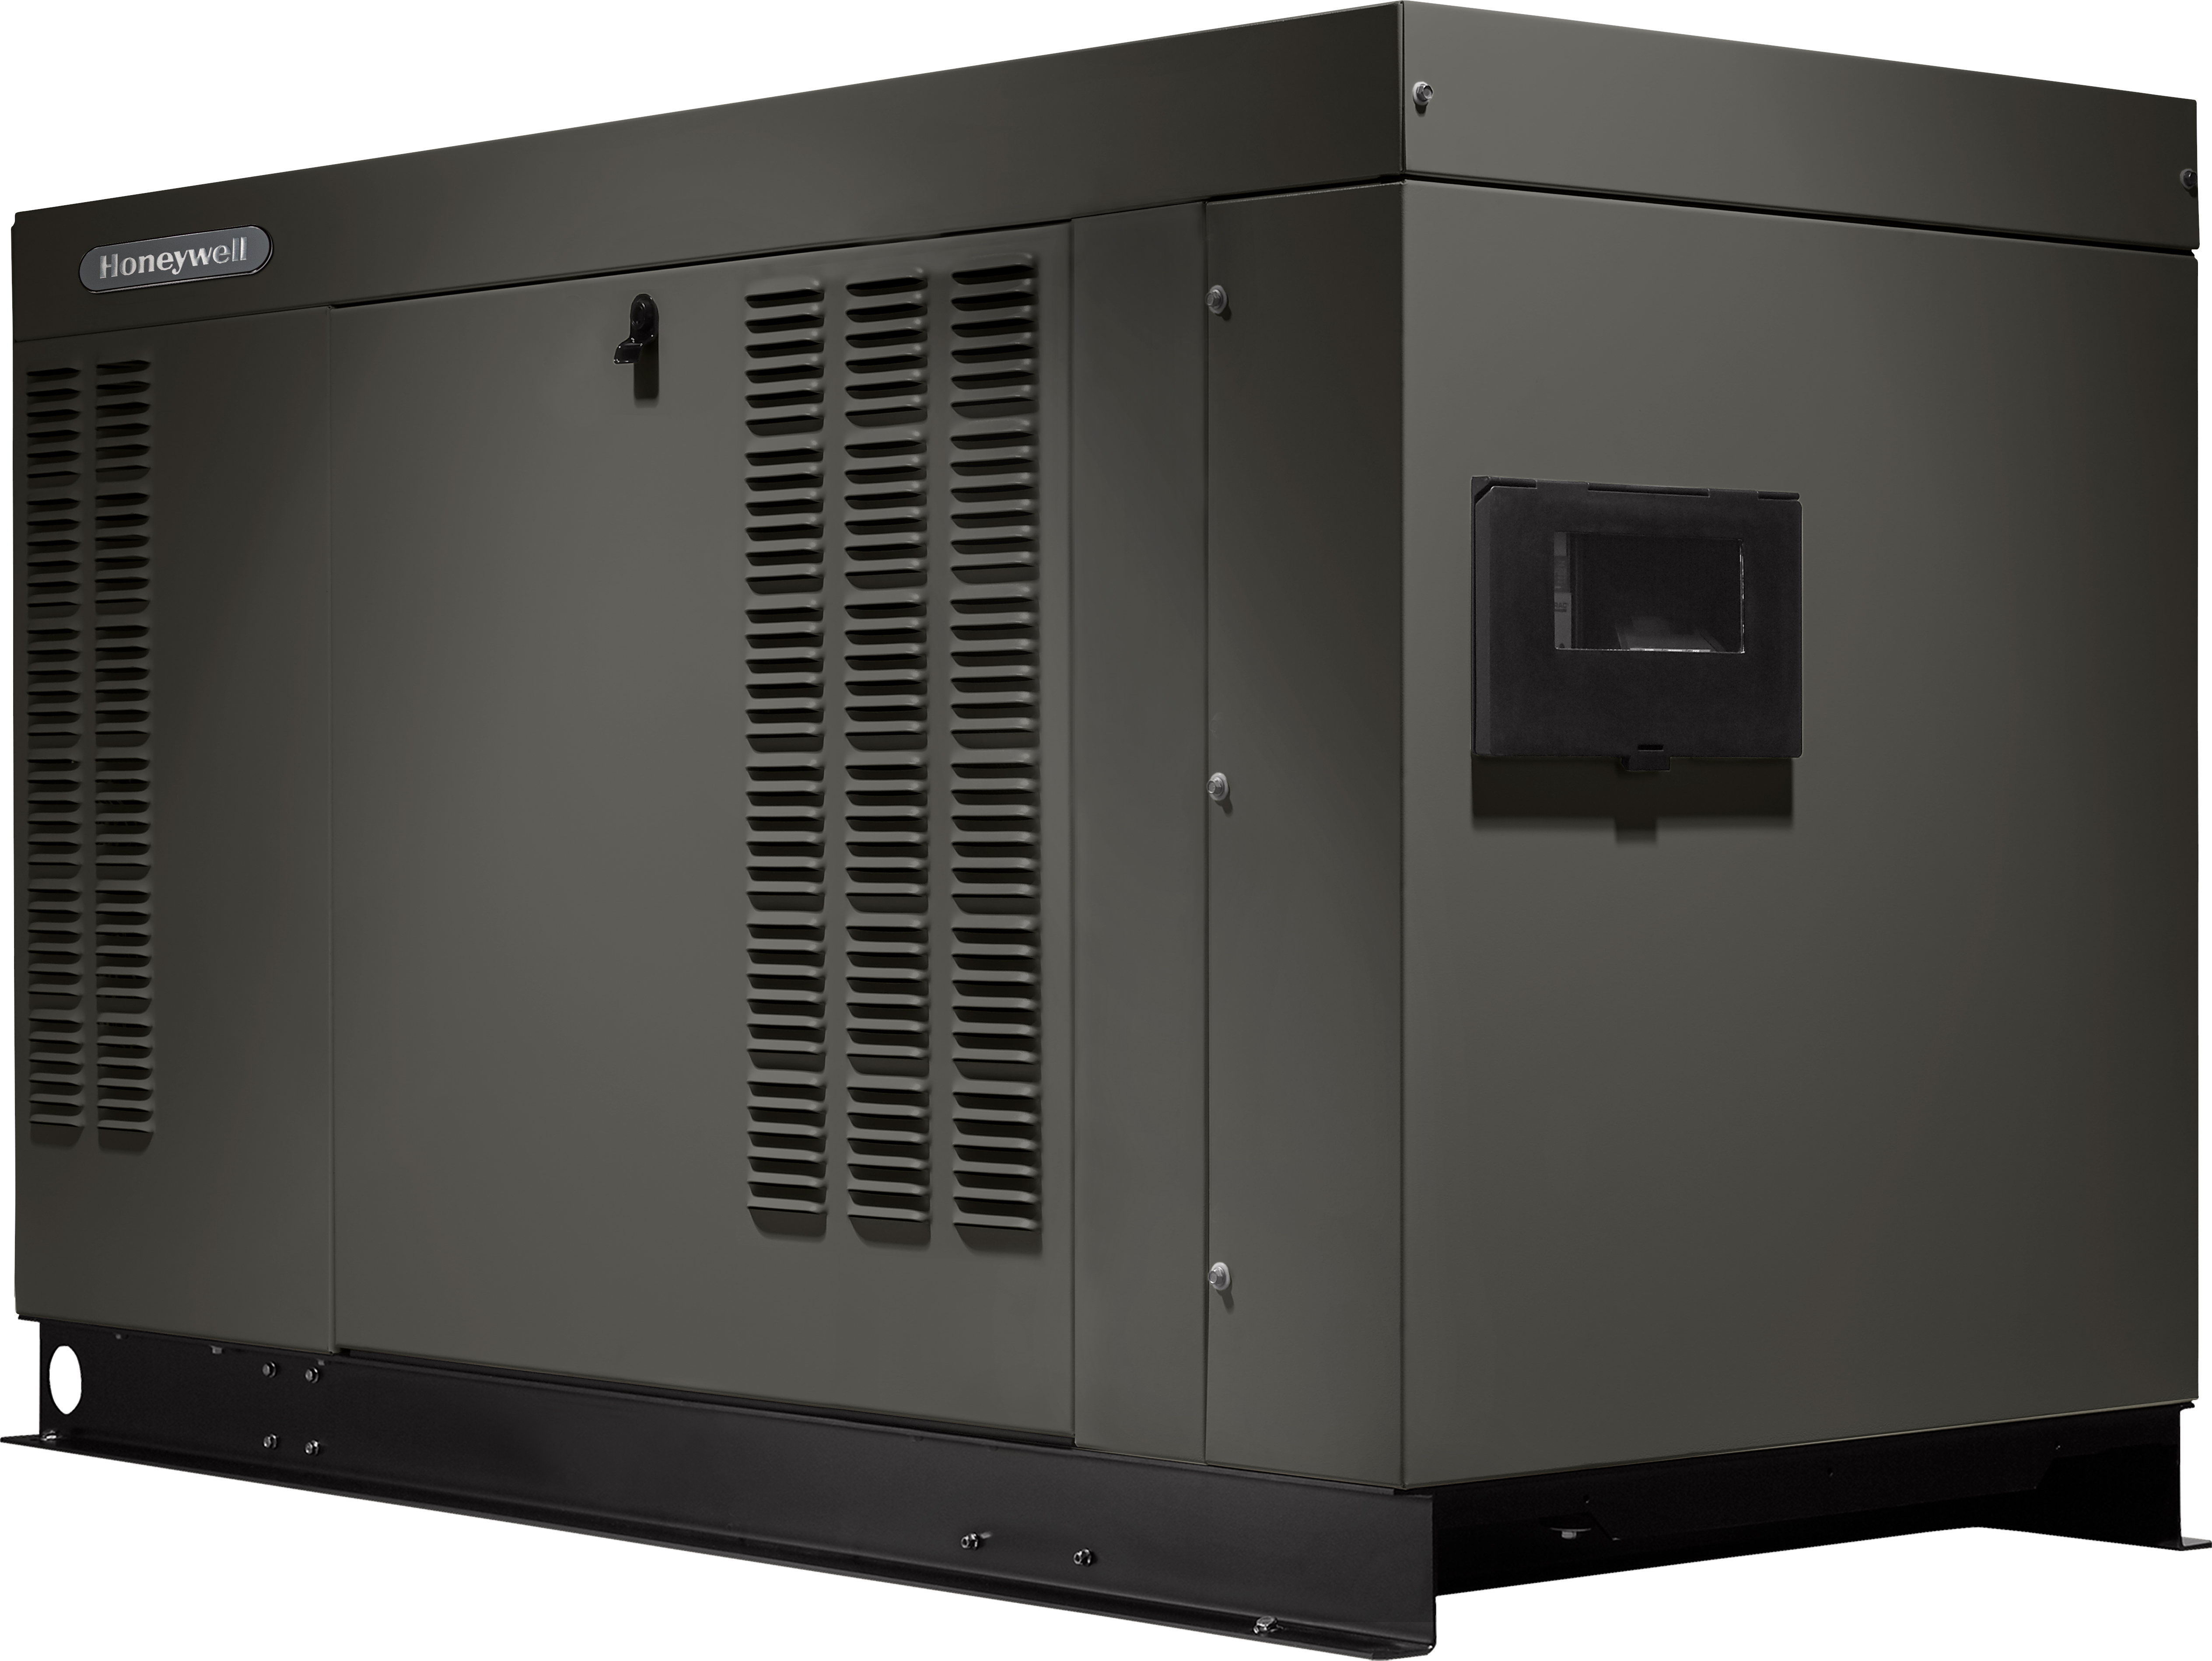 Honeywell 48 kW Liquid-Cooled Backup Generator